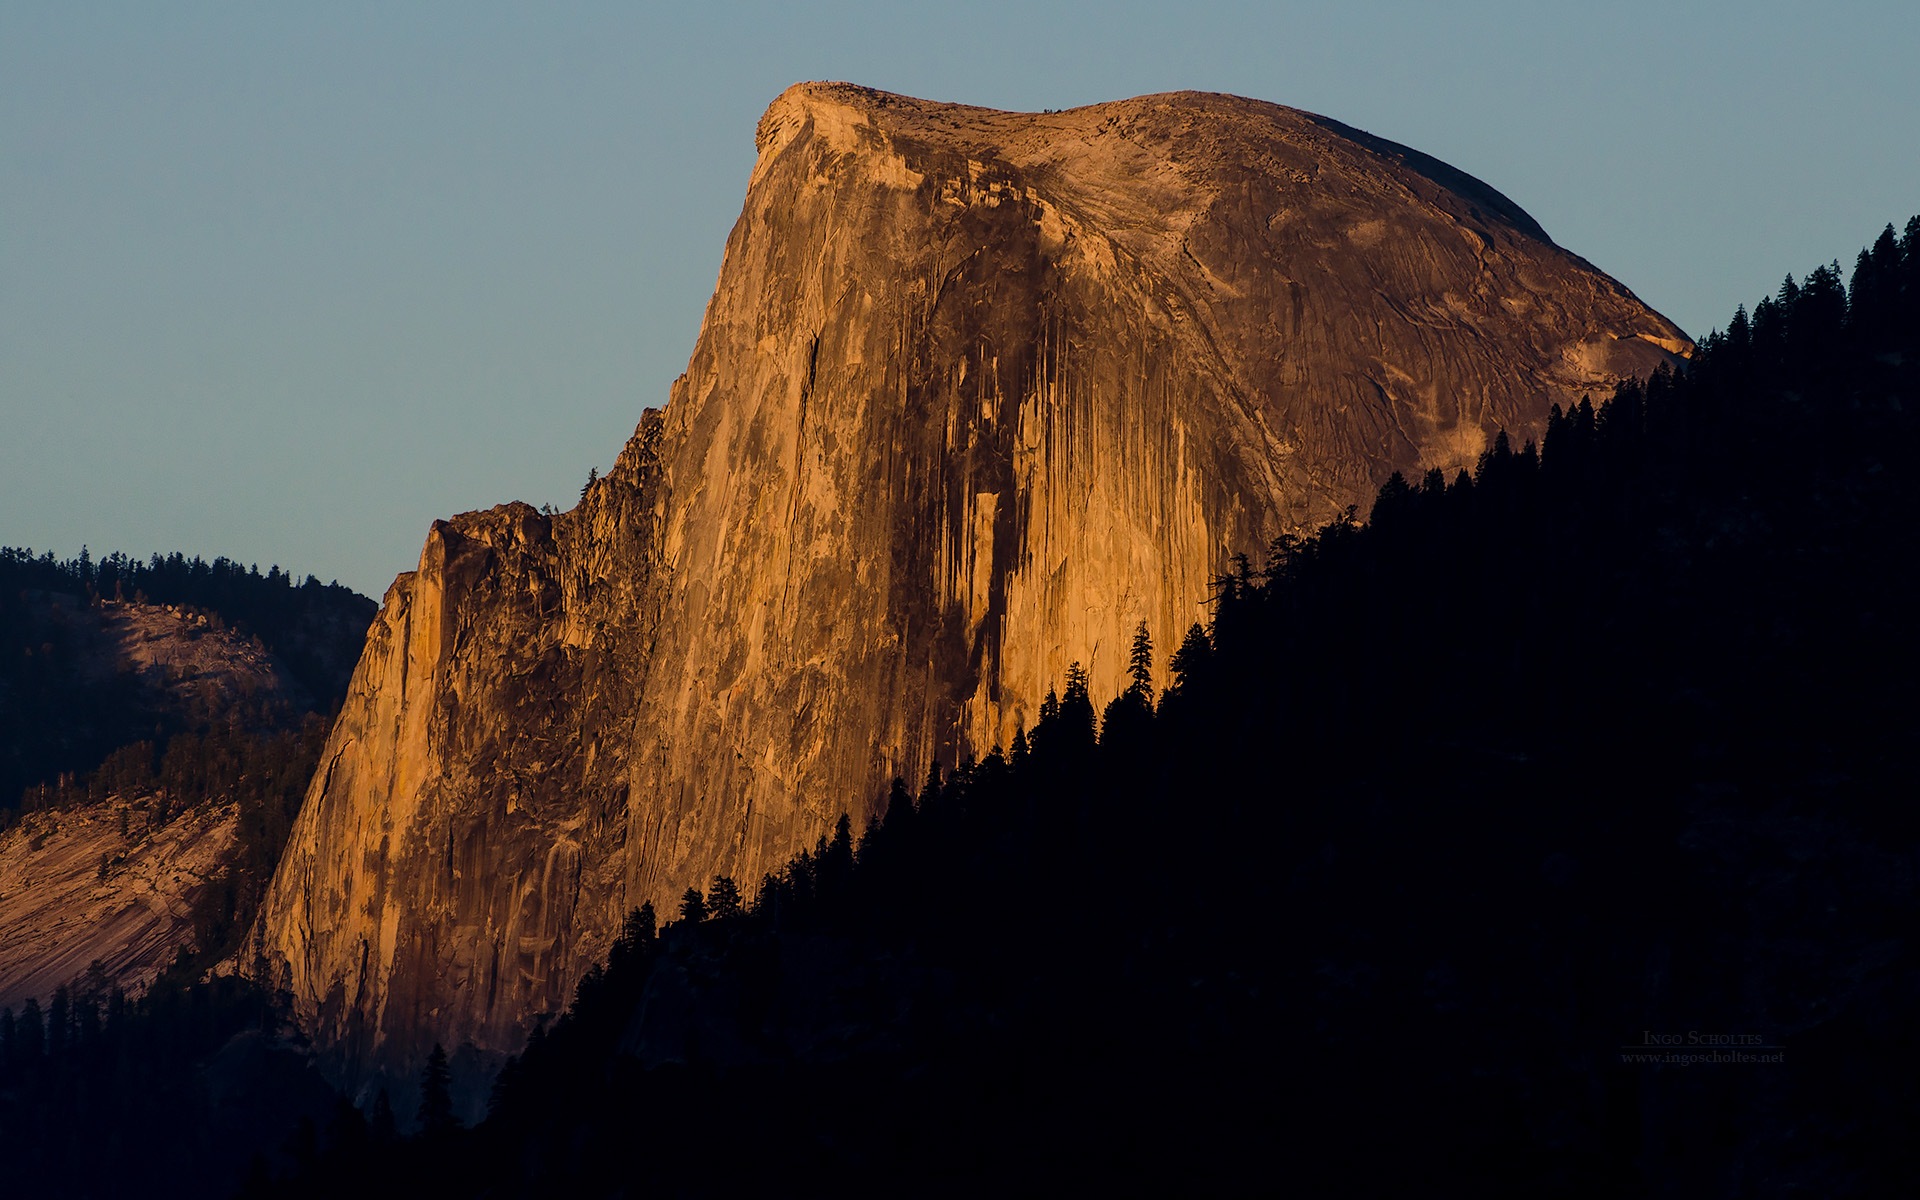 Windows 8 Thema, Yosemite National Park HD Wallpaper #6 - 1920x1200